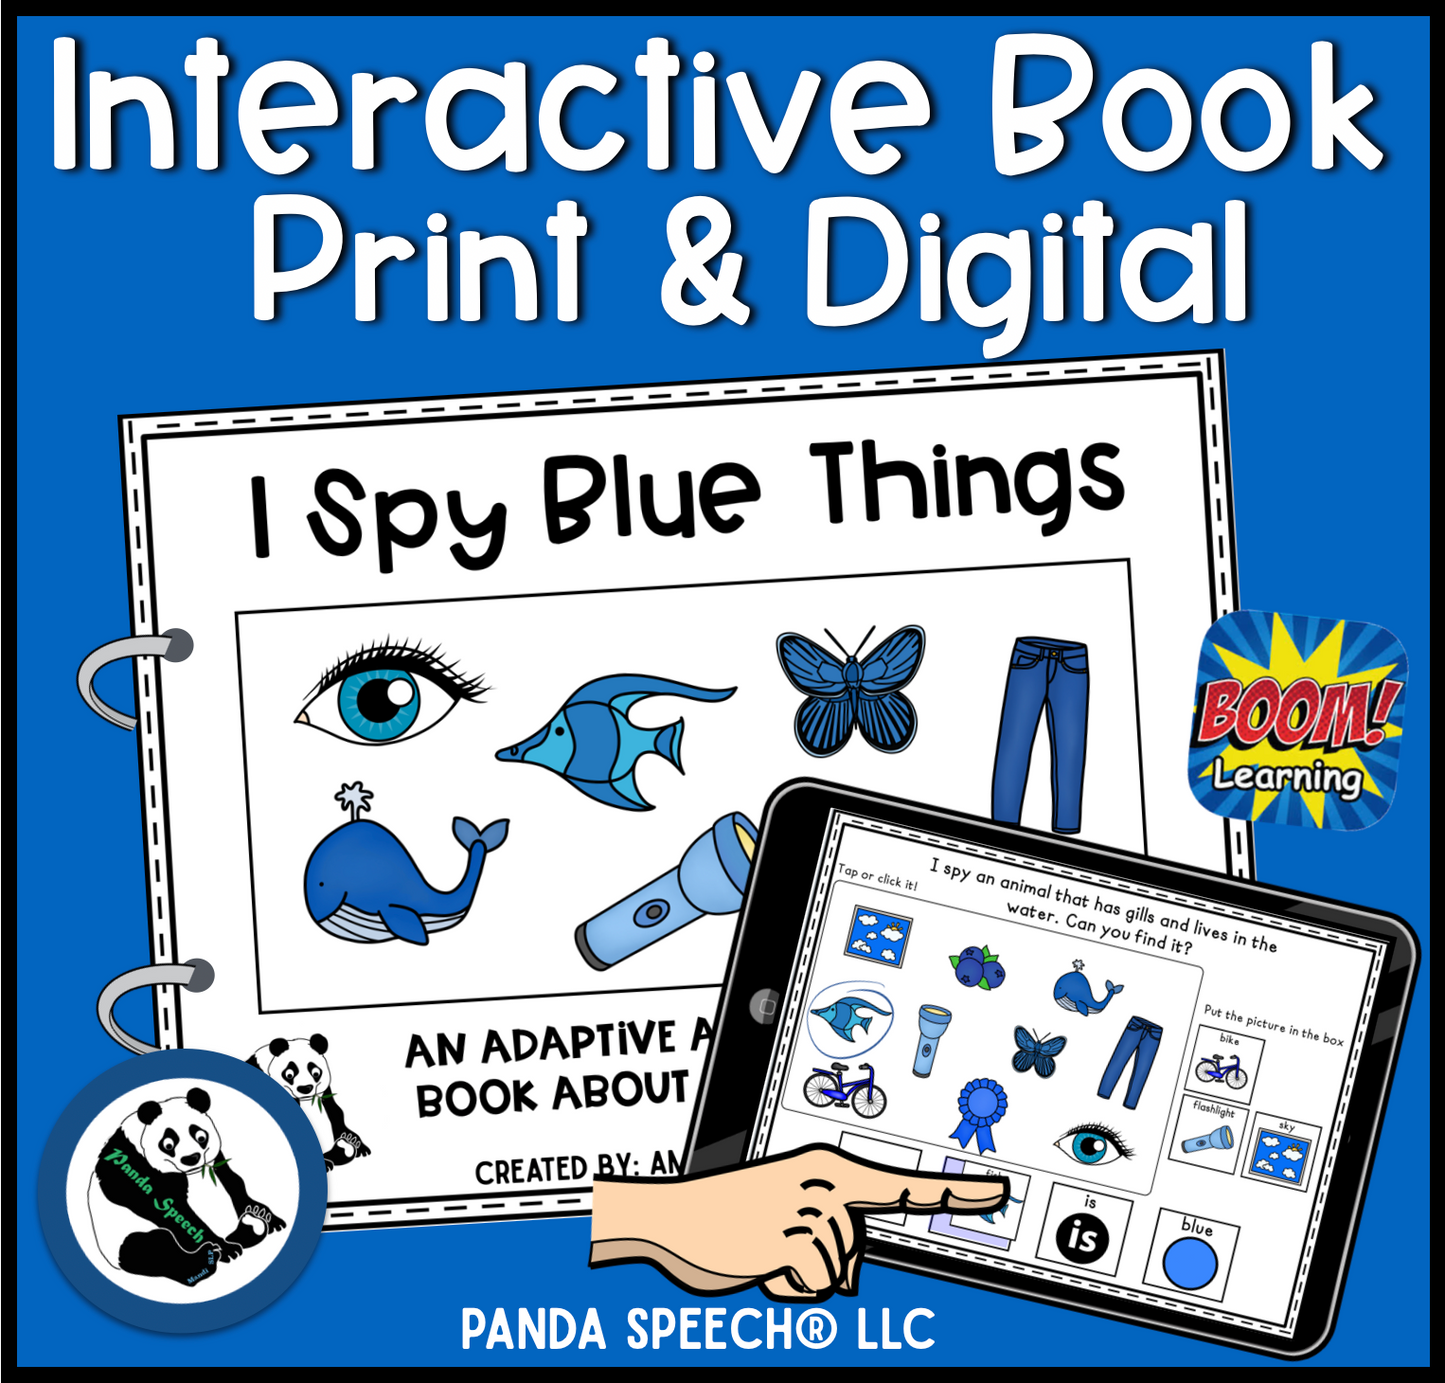 I Spy BLUE Things! Color Series Print & Make Books (includes a digital BOOM Card book)